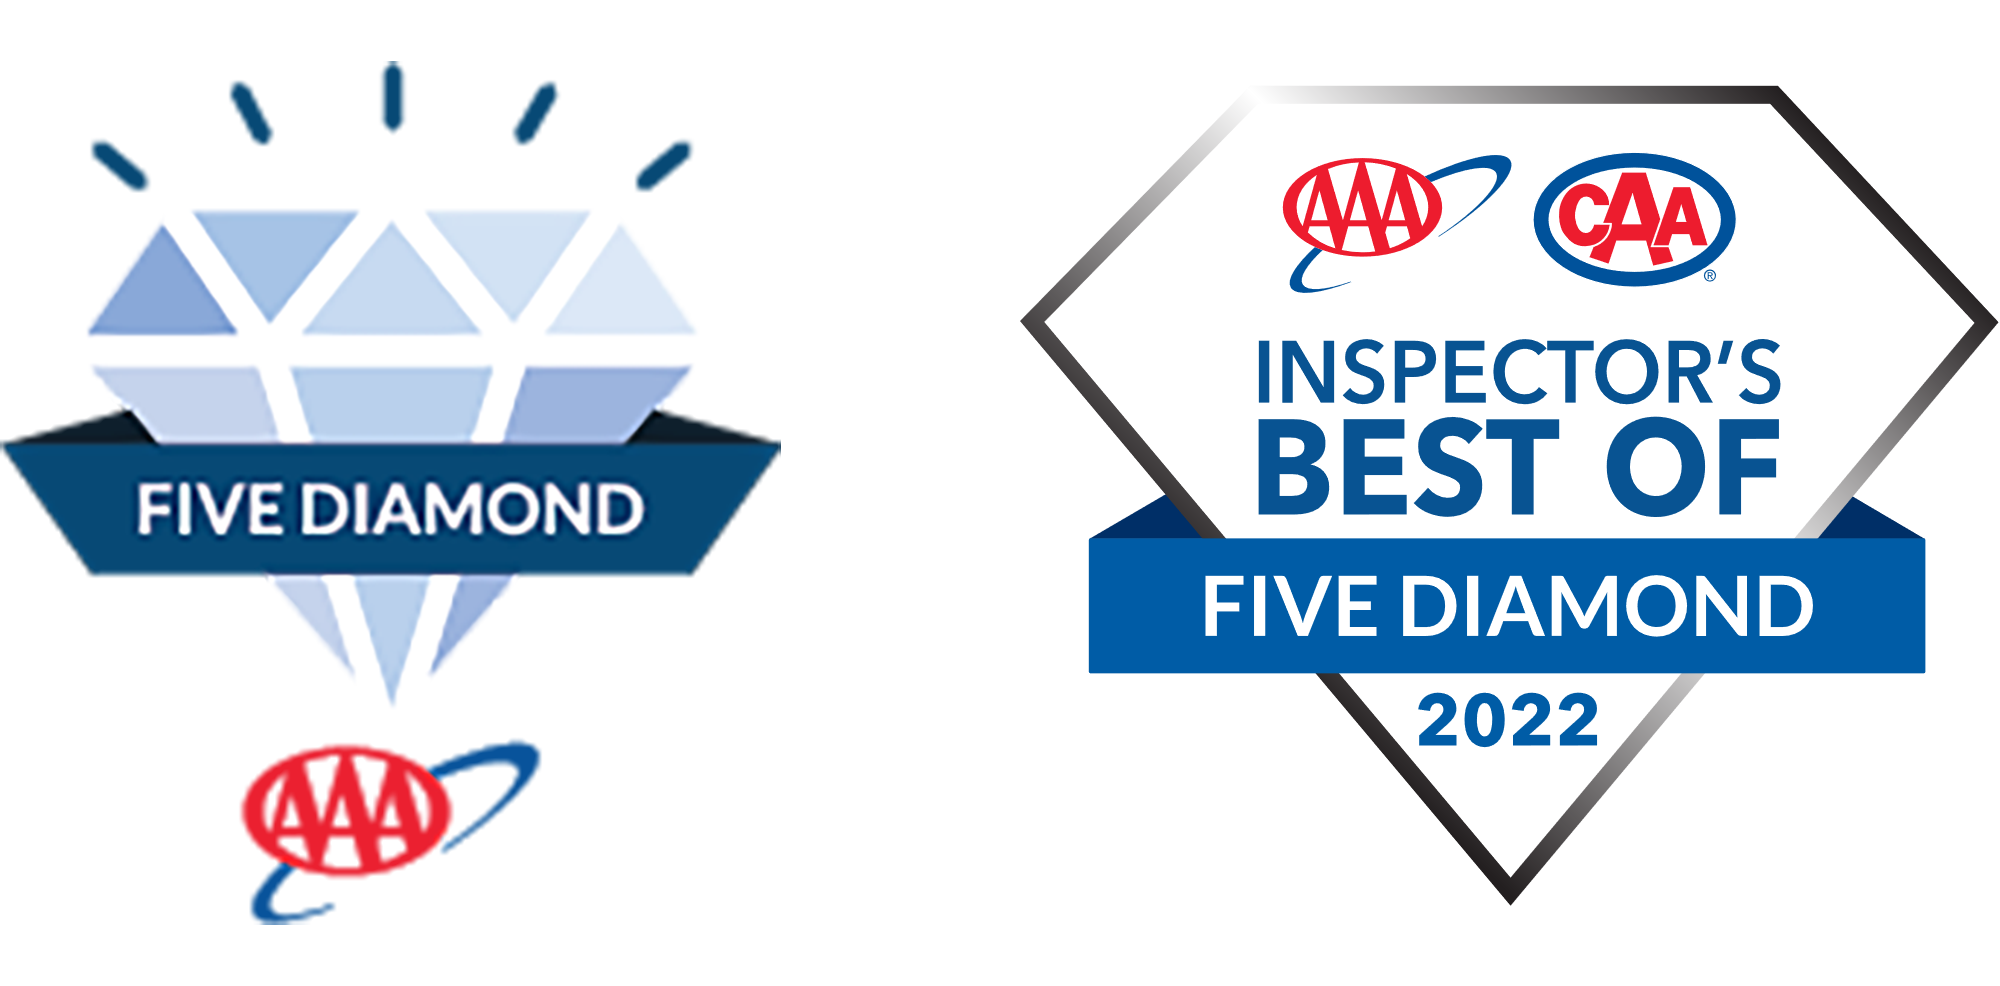 AAA Five Diamond Designation and Inspector's Best of Five Diamond 2022